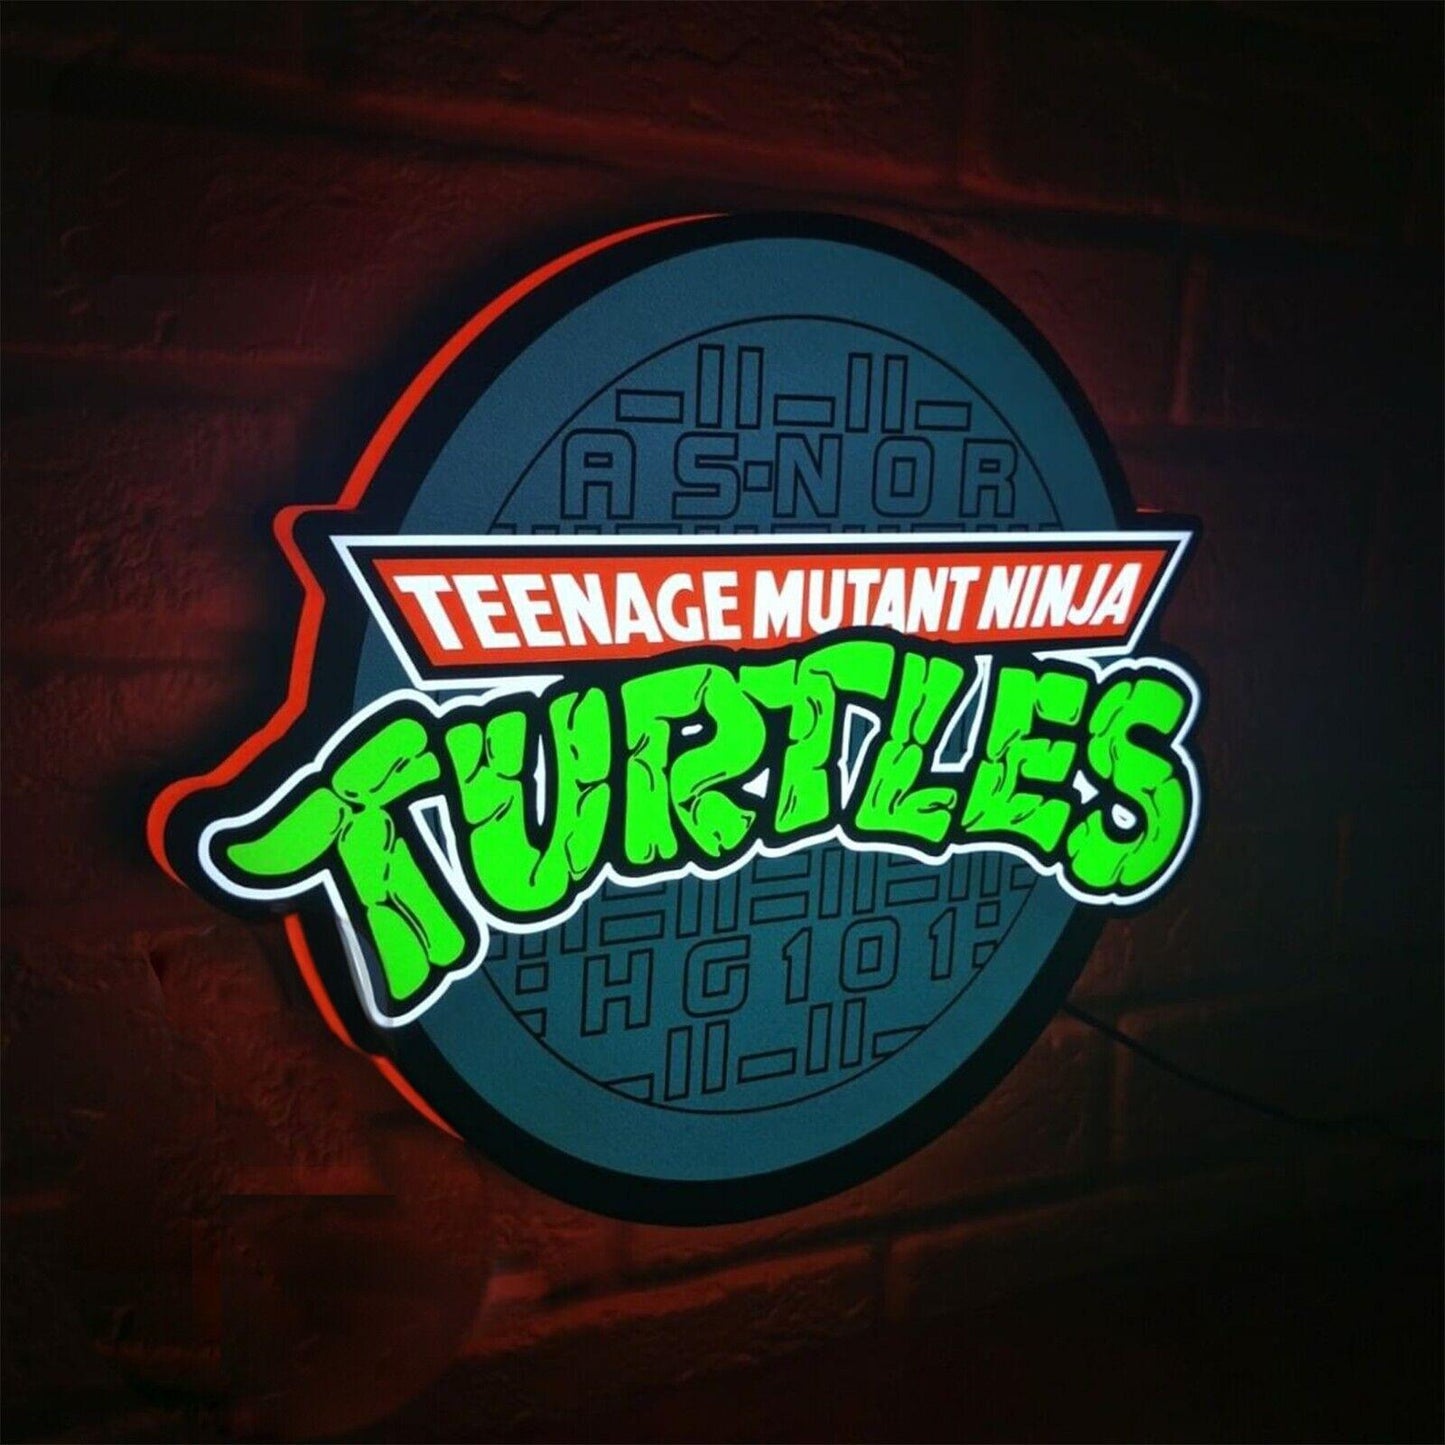 TMNT Teenage Mutant Ninja Turtles Fan Art 3D Lightbox Fully Dimmable USB Power Supply - FYLZGO Signs